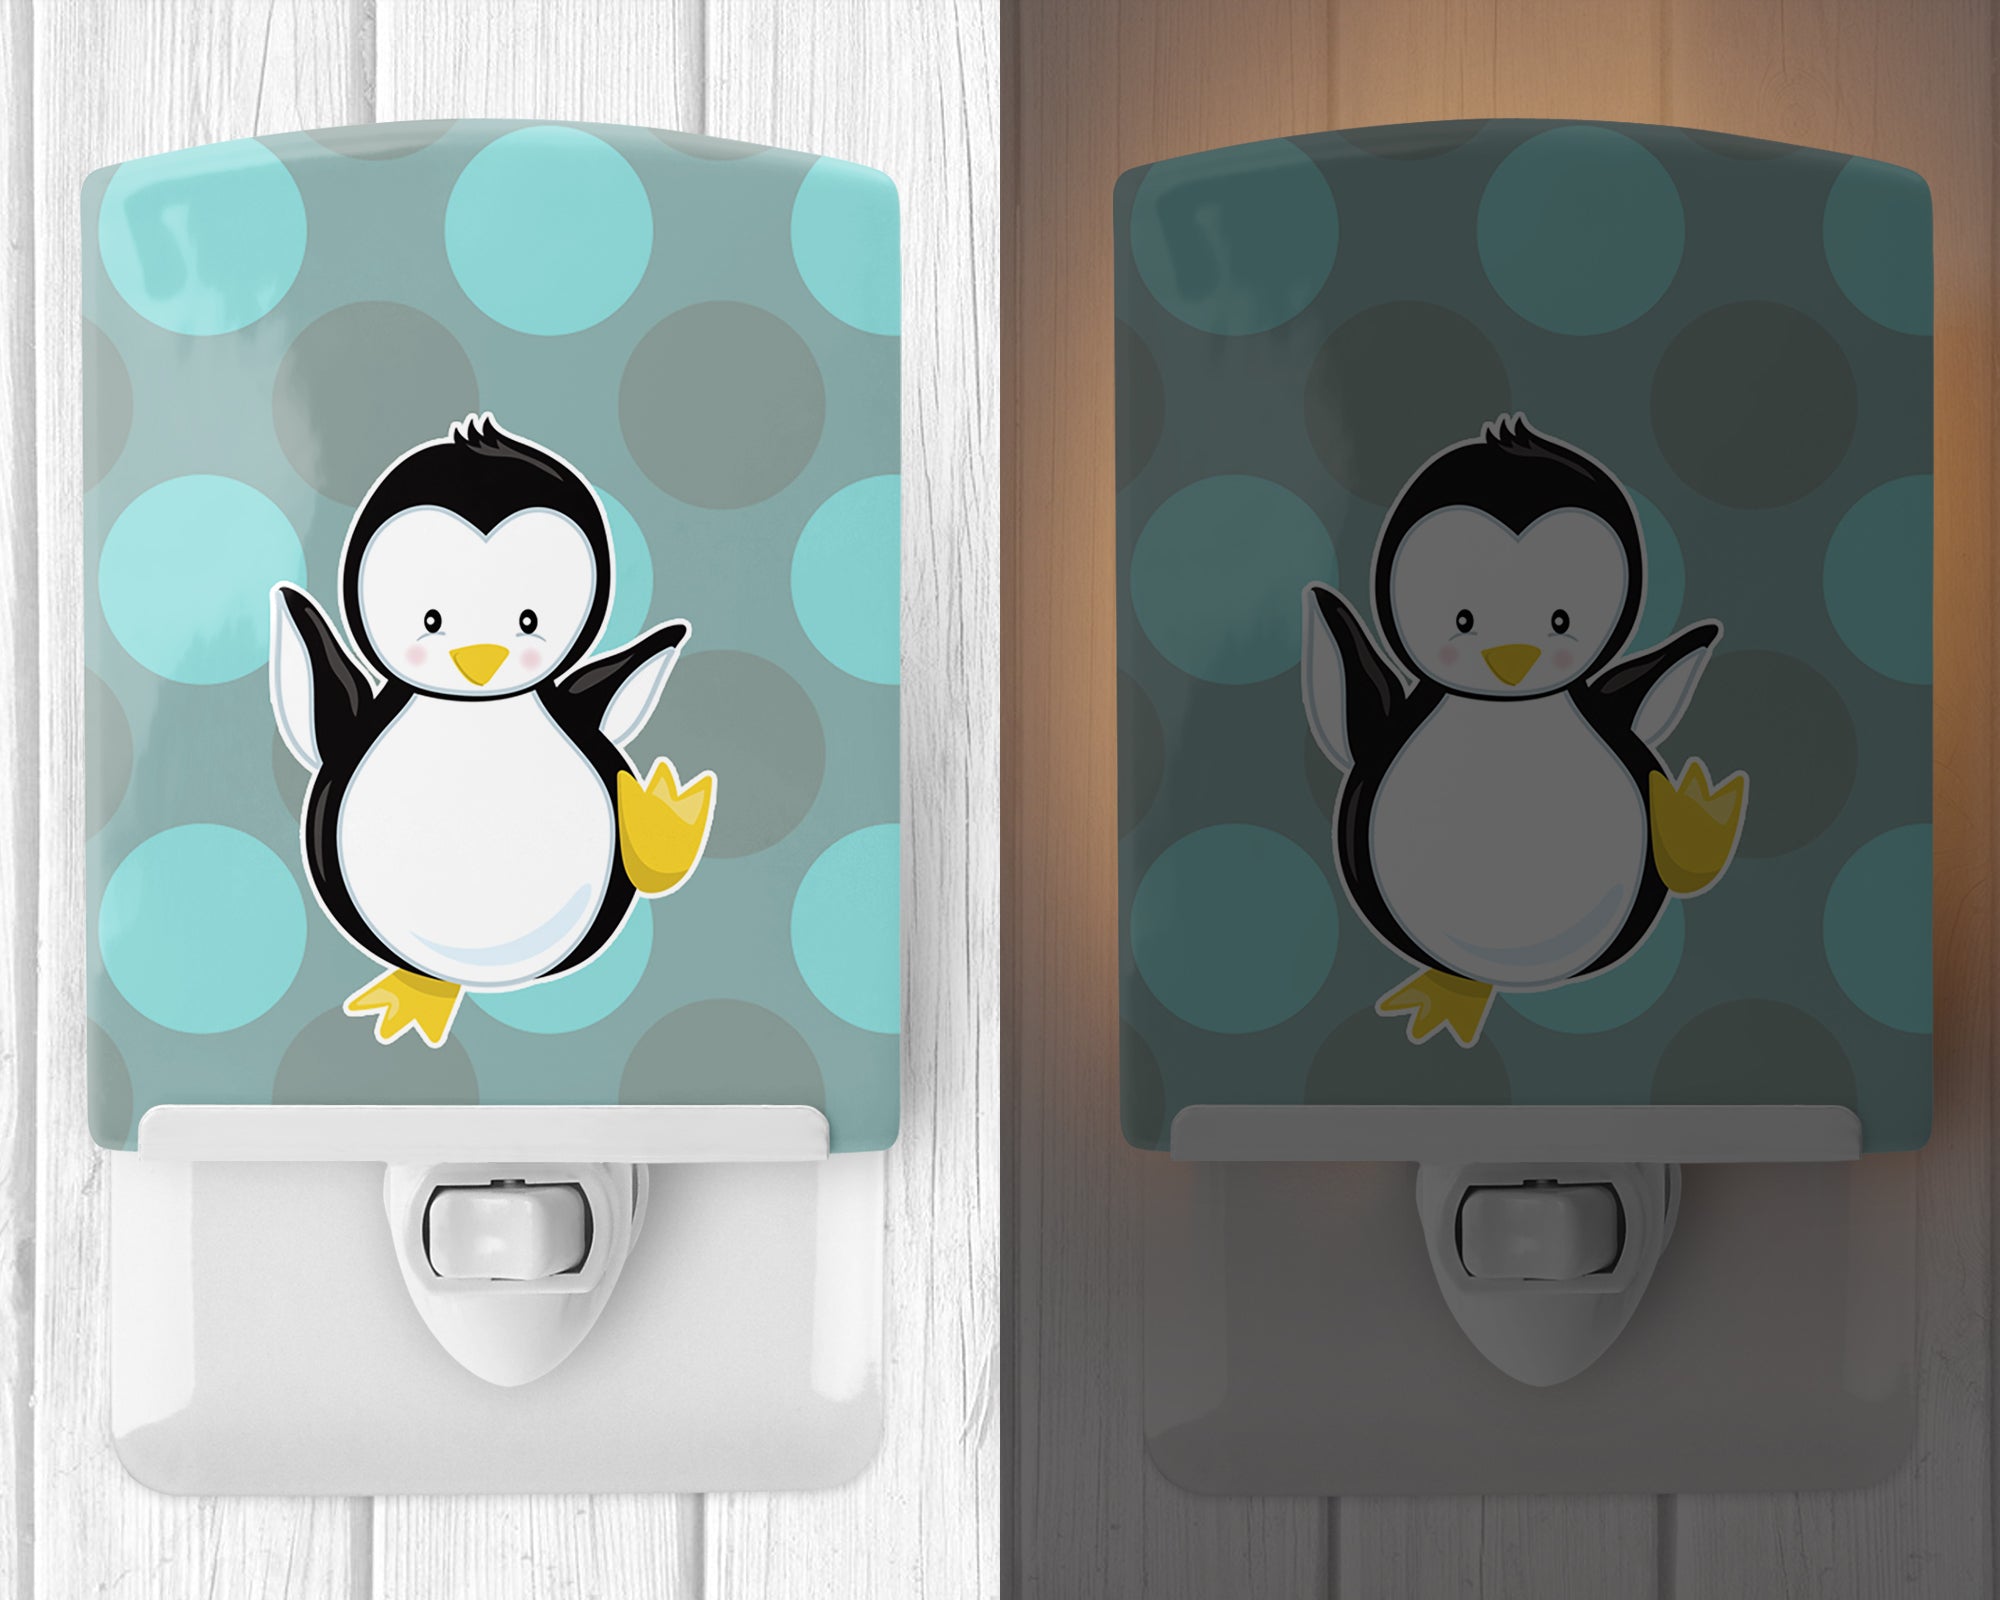 Penguin on Polkadot Ceramic Night Light BB8605CNL - the-store.com